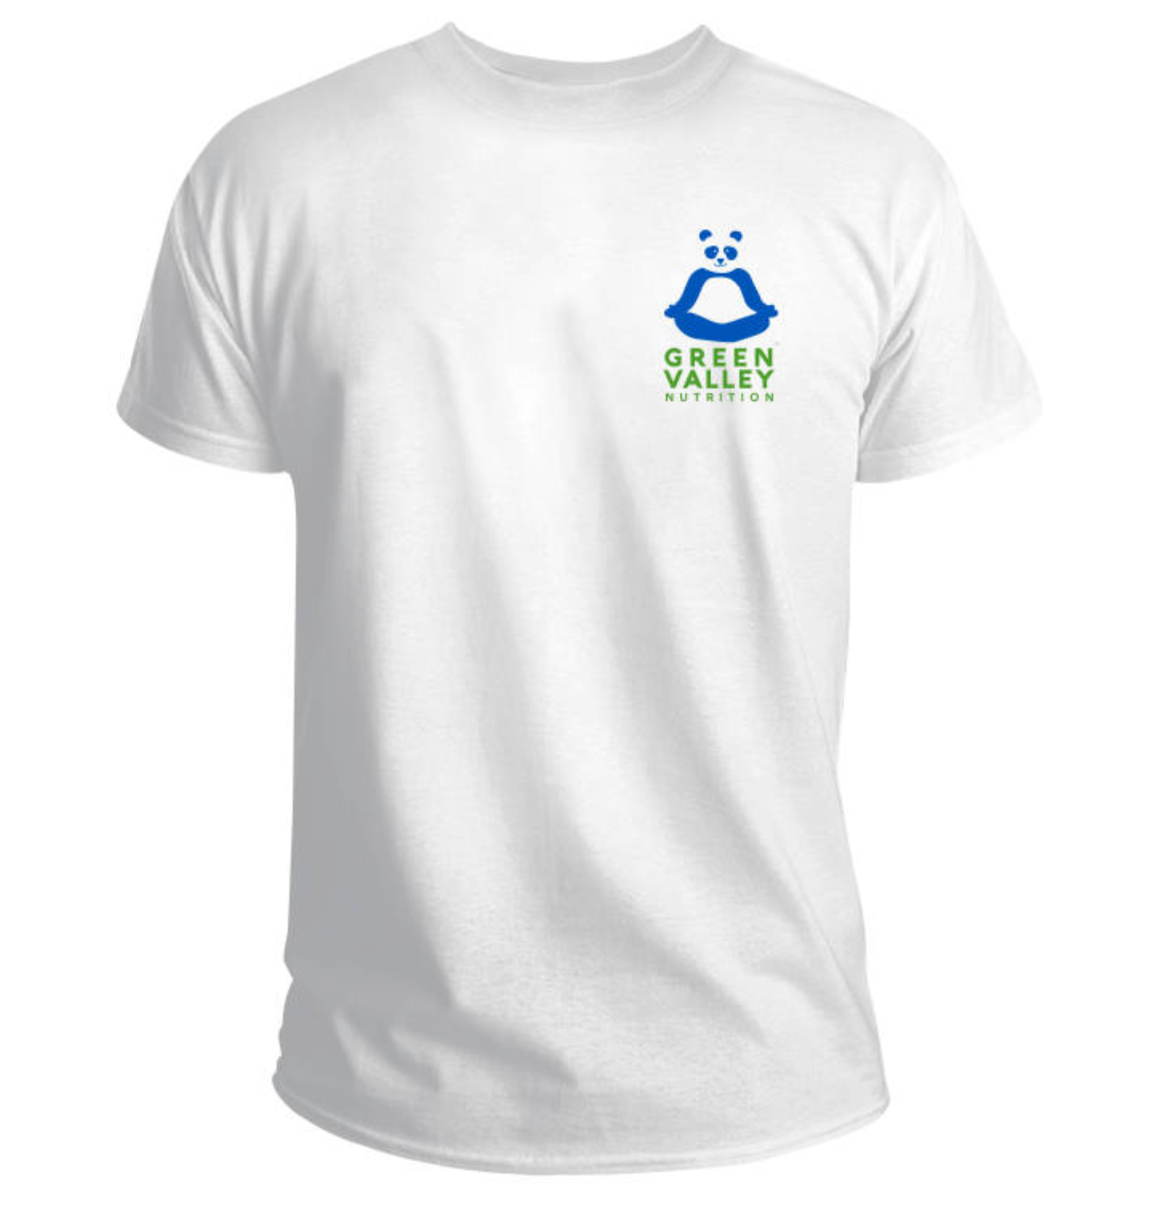 Green Valley T-Shirt - Green Valley Nutrition